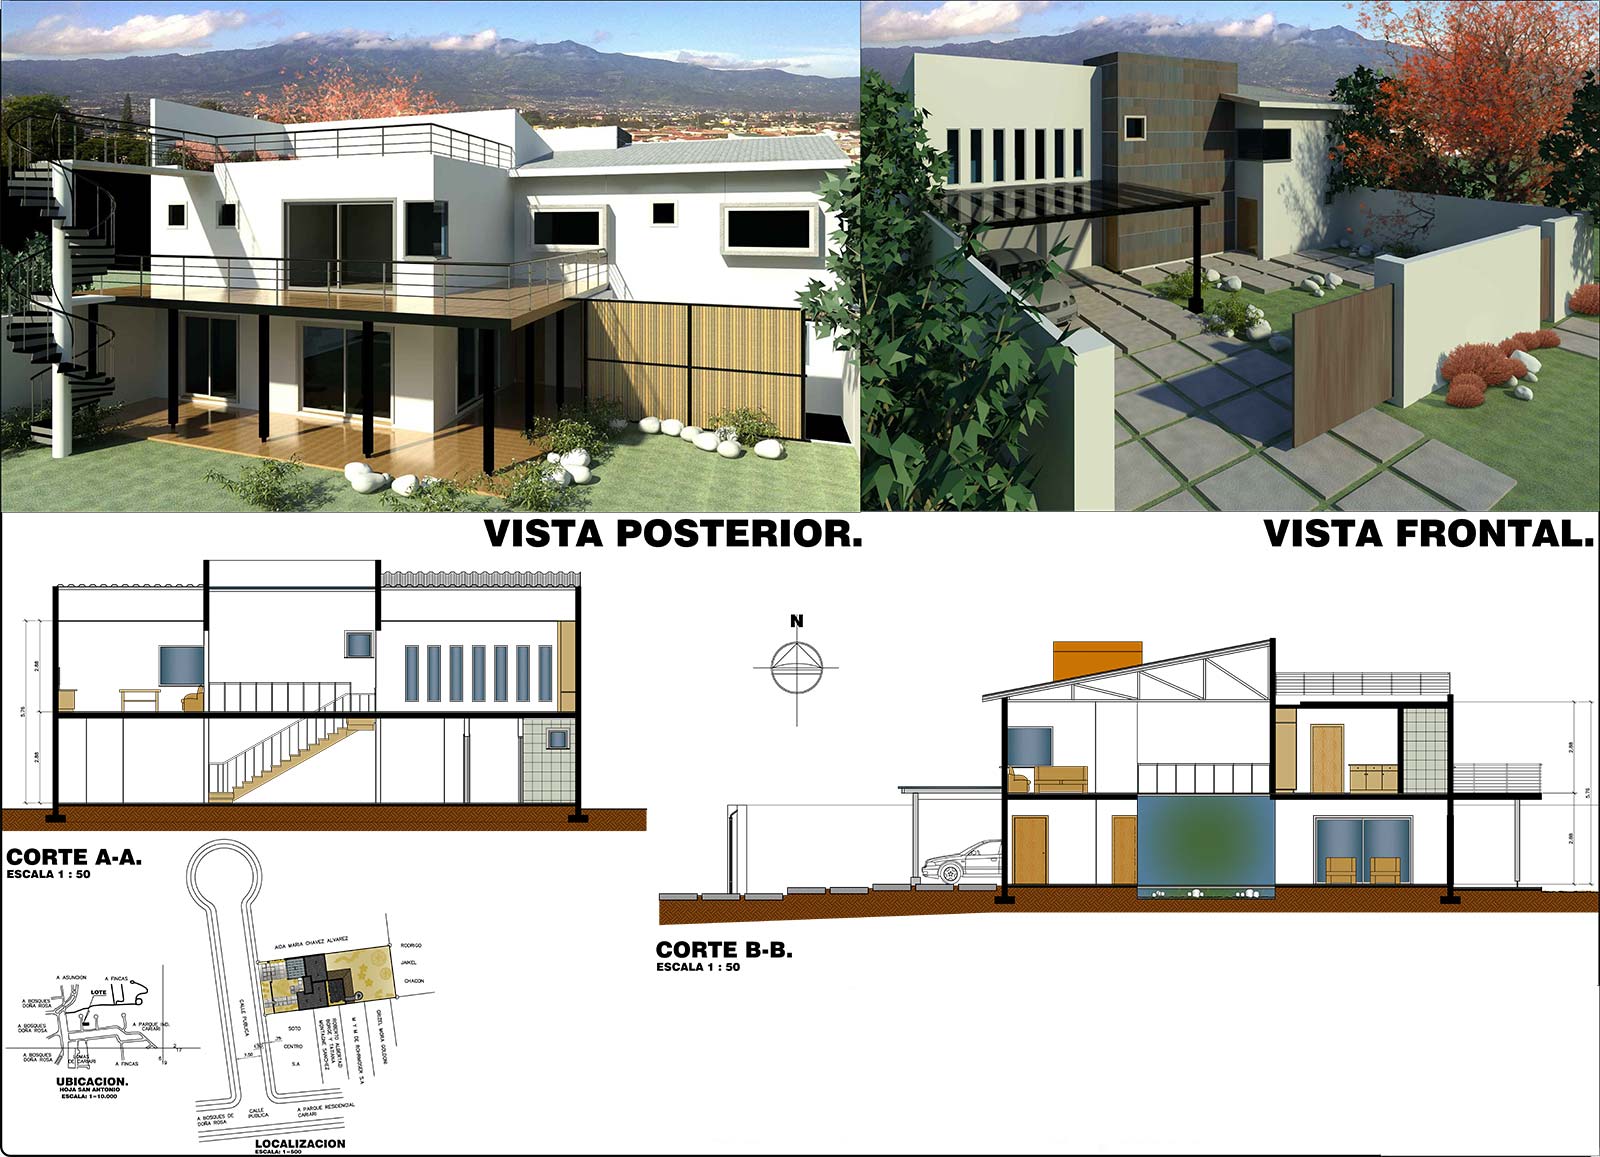 Costa Rica, San Jose, Warehouse, rental, Storage, Bodega, Ofibodega, Office Space, for rent, lease, in La Uruca